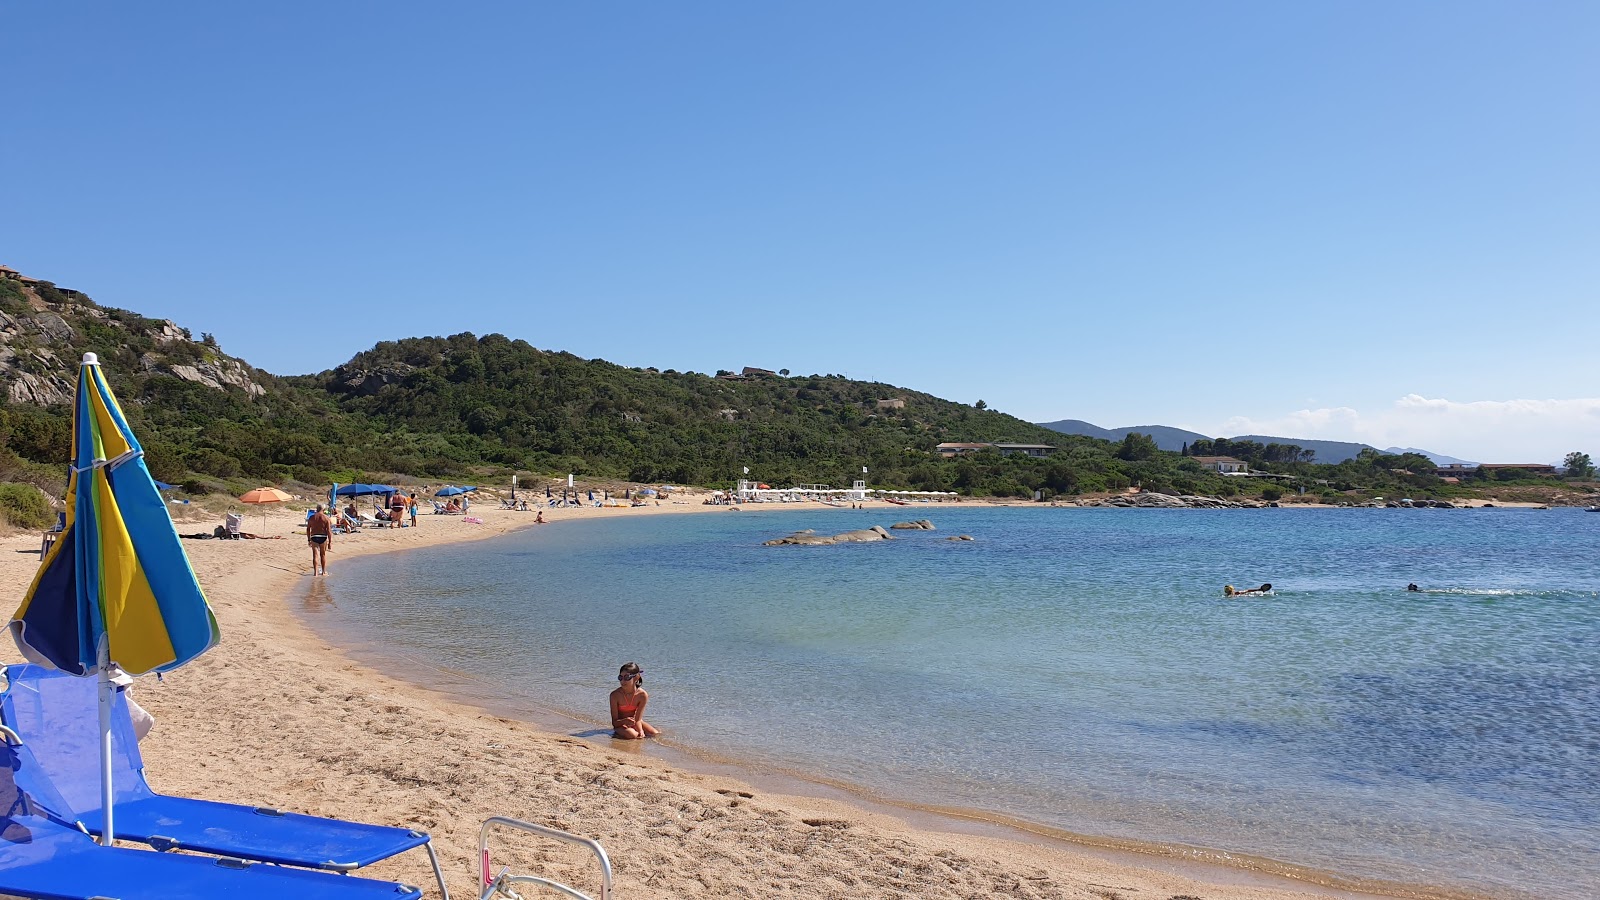 Foto av Spiaggia Su Sarrale med brunsand yta